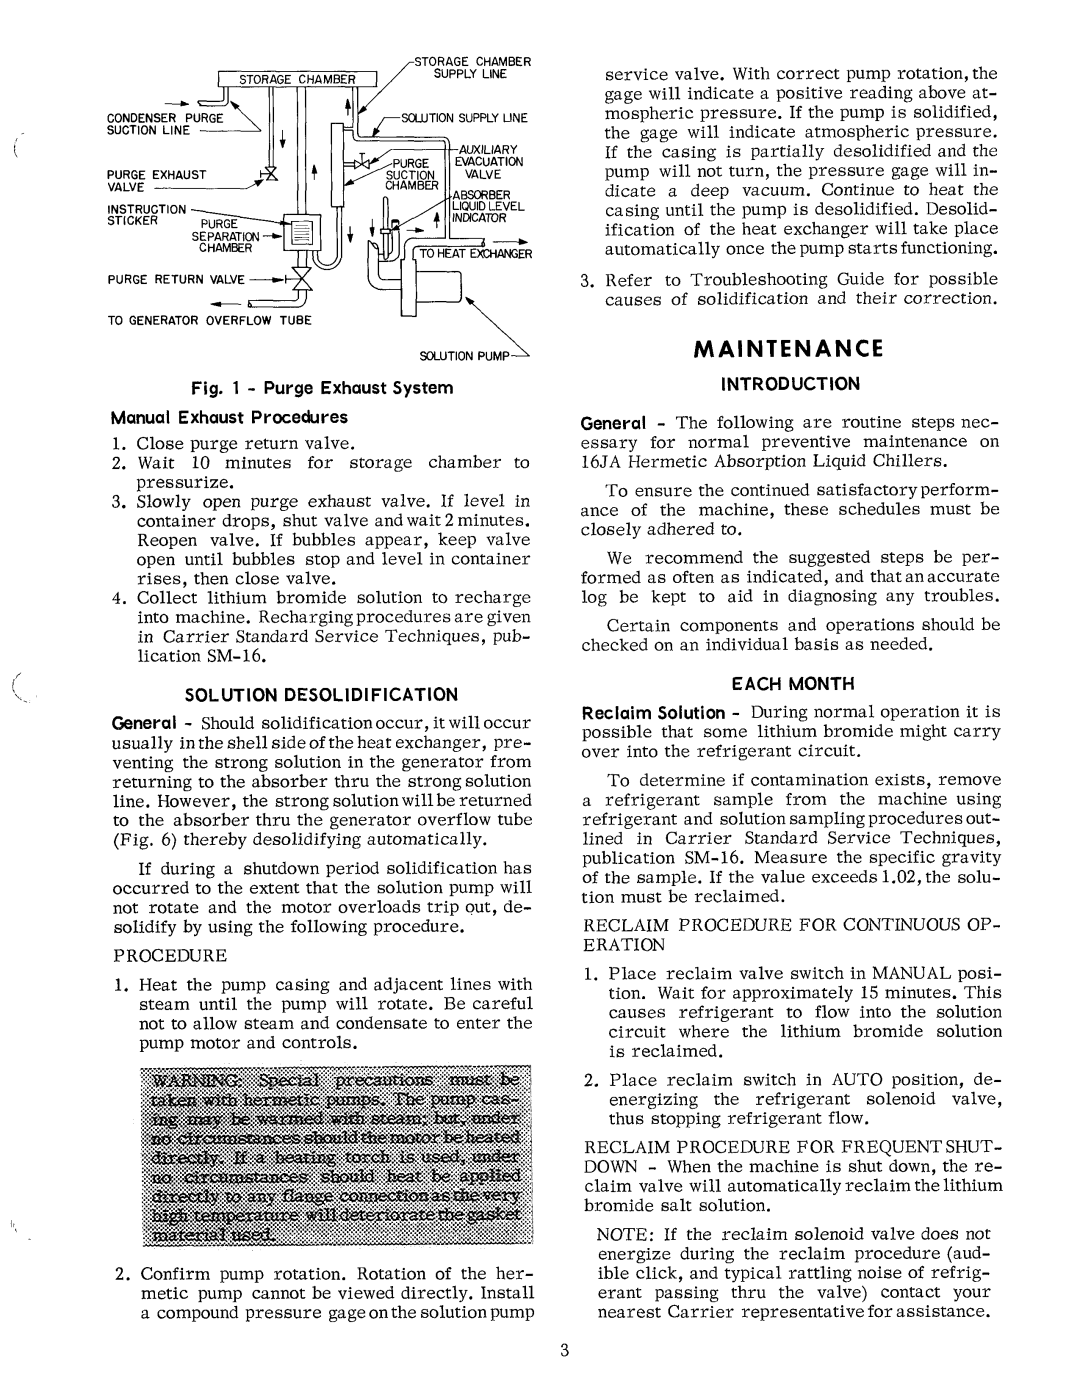 Carrier 16JA manual 